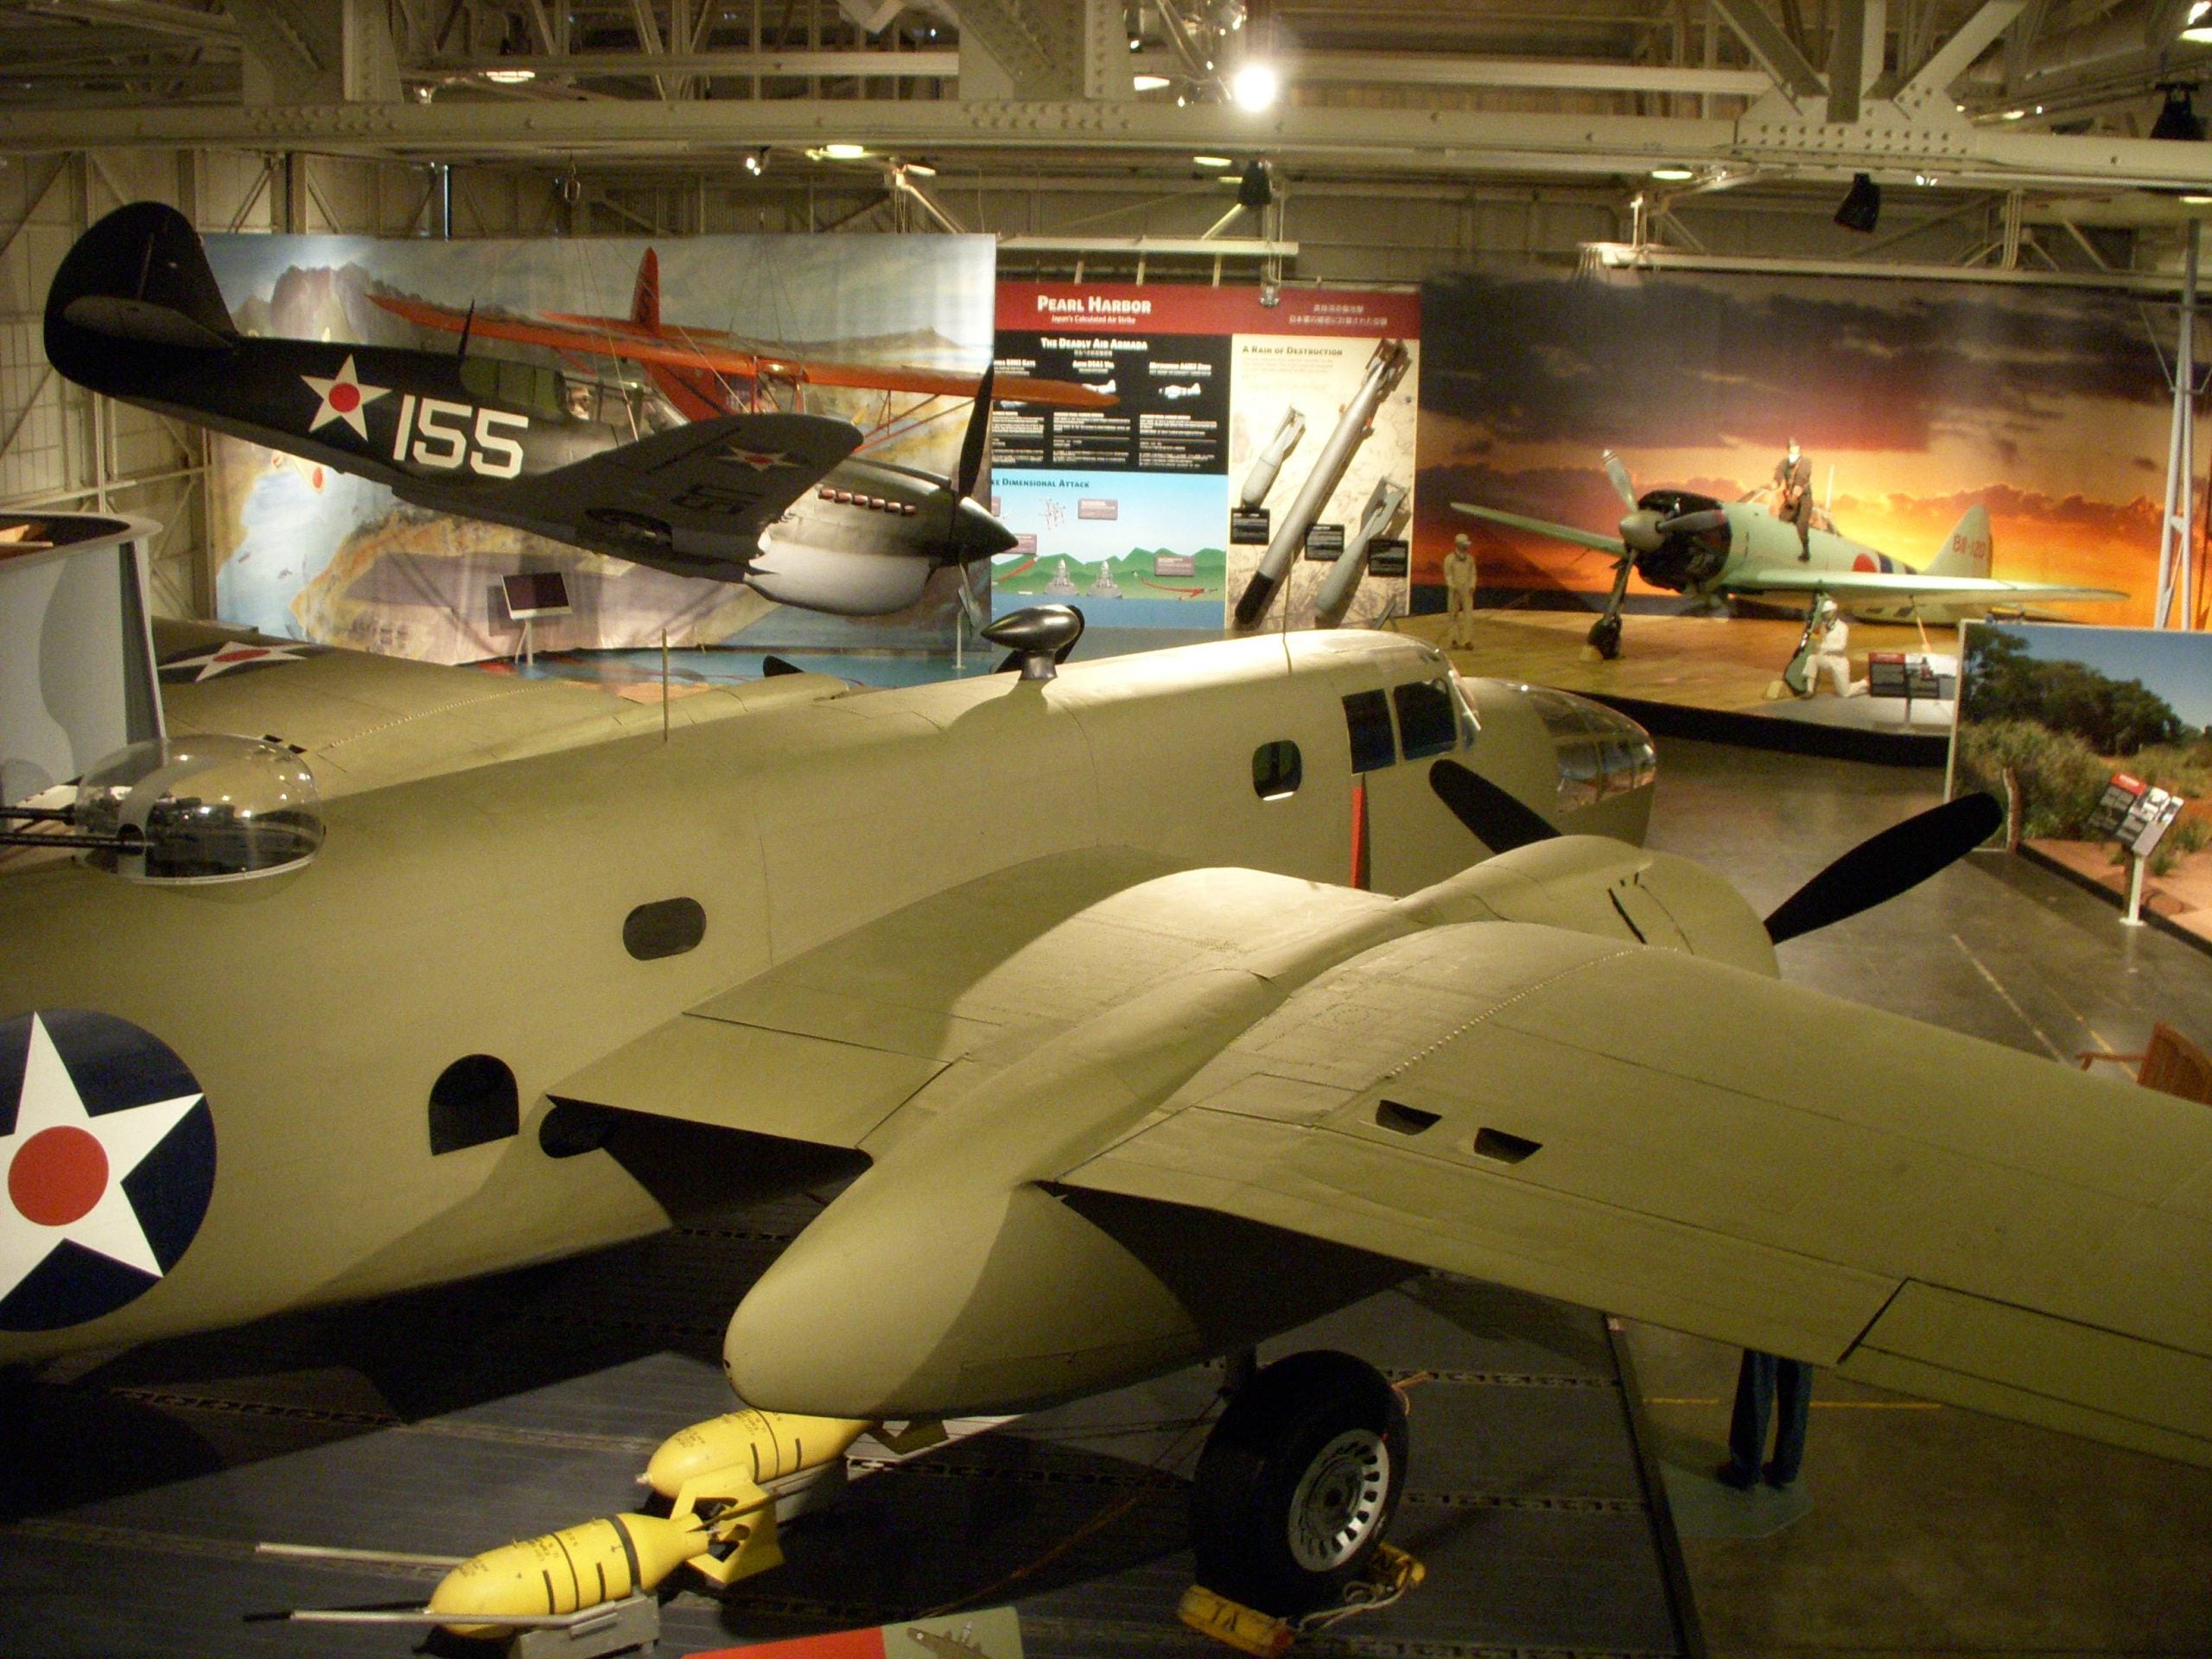 A look at Hangar 79 at the Pearl Harbor Museum.